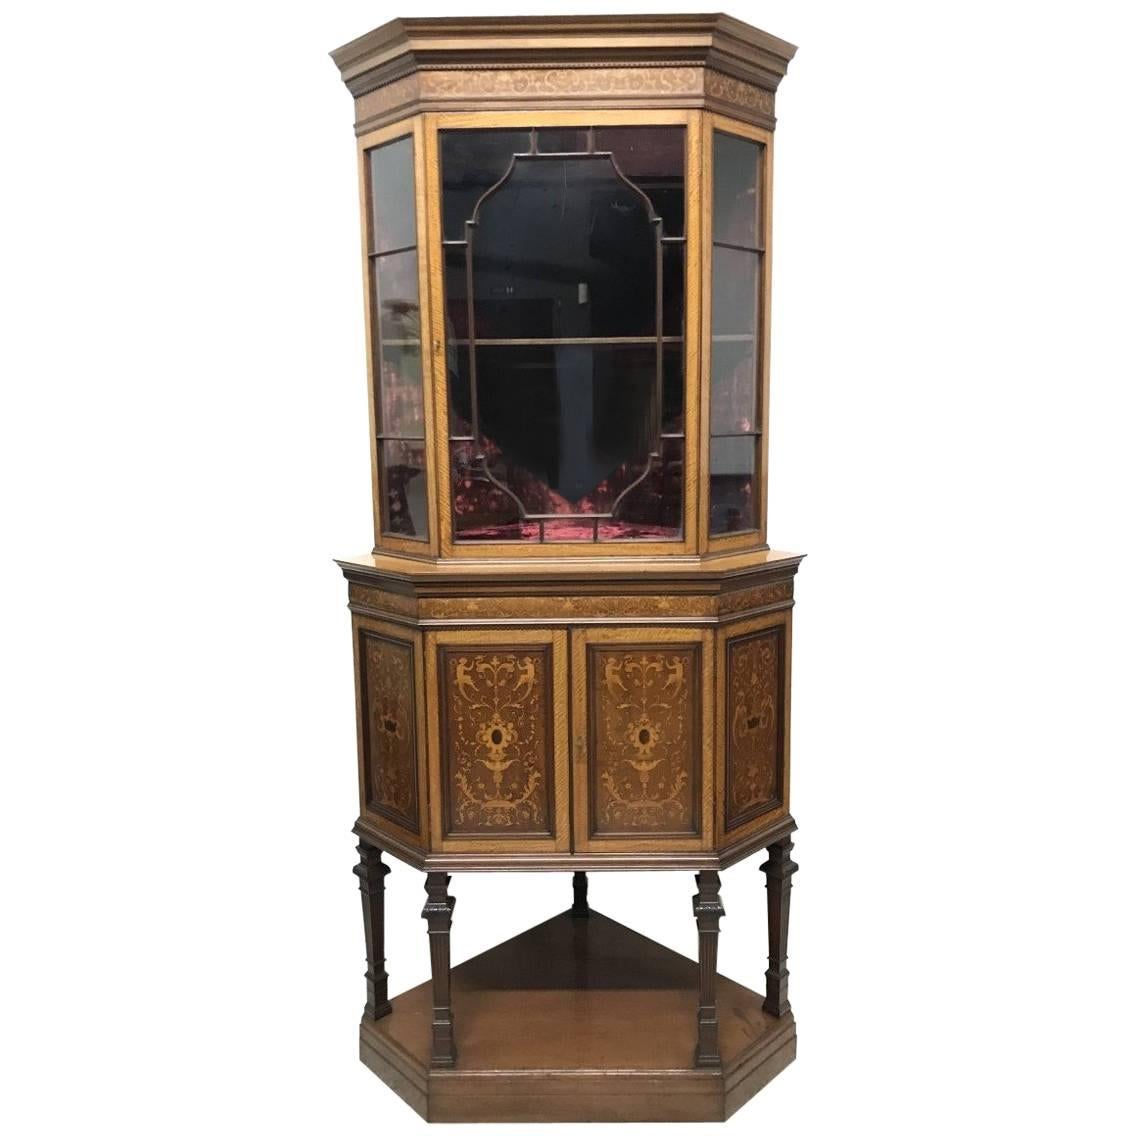 Stephen Webb for Collinson & Lock, a Renaissance Revival Inlaid Corner Cabinet For Sale